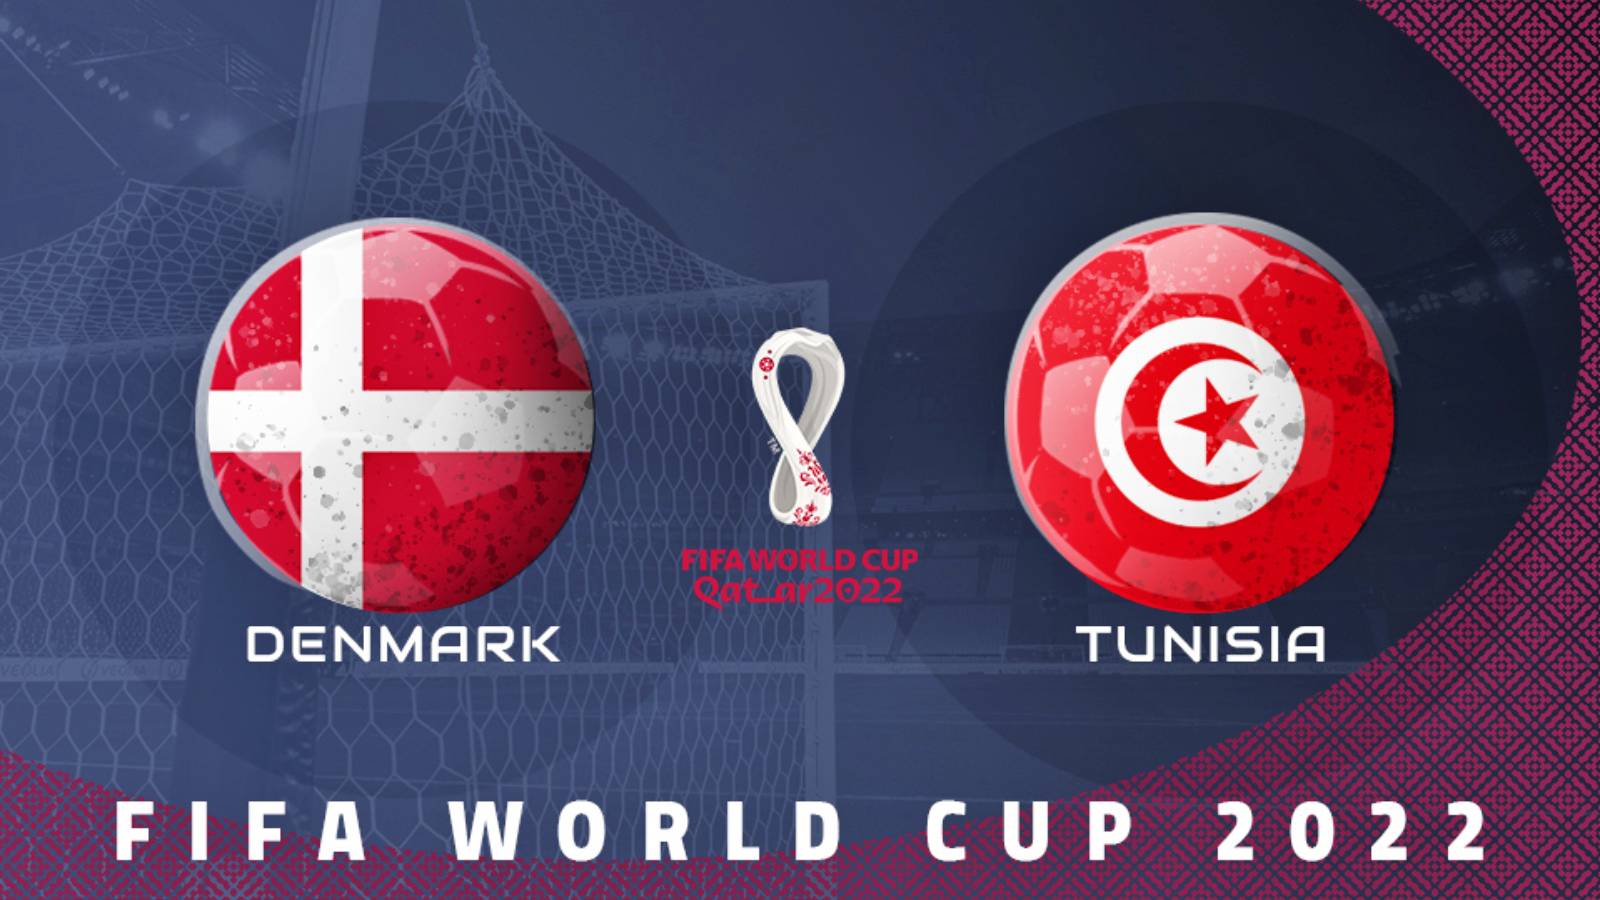 DENMARK - TUNISIA TVR 1 LIVE MATCH WORLD CUP 2022 QATAR